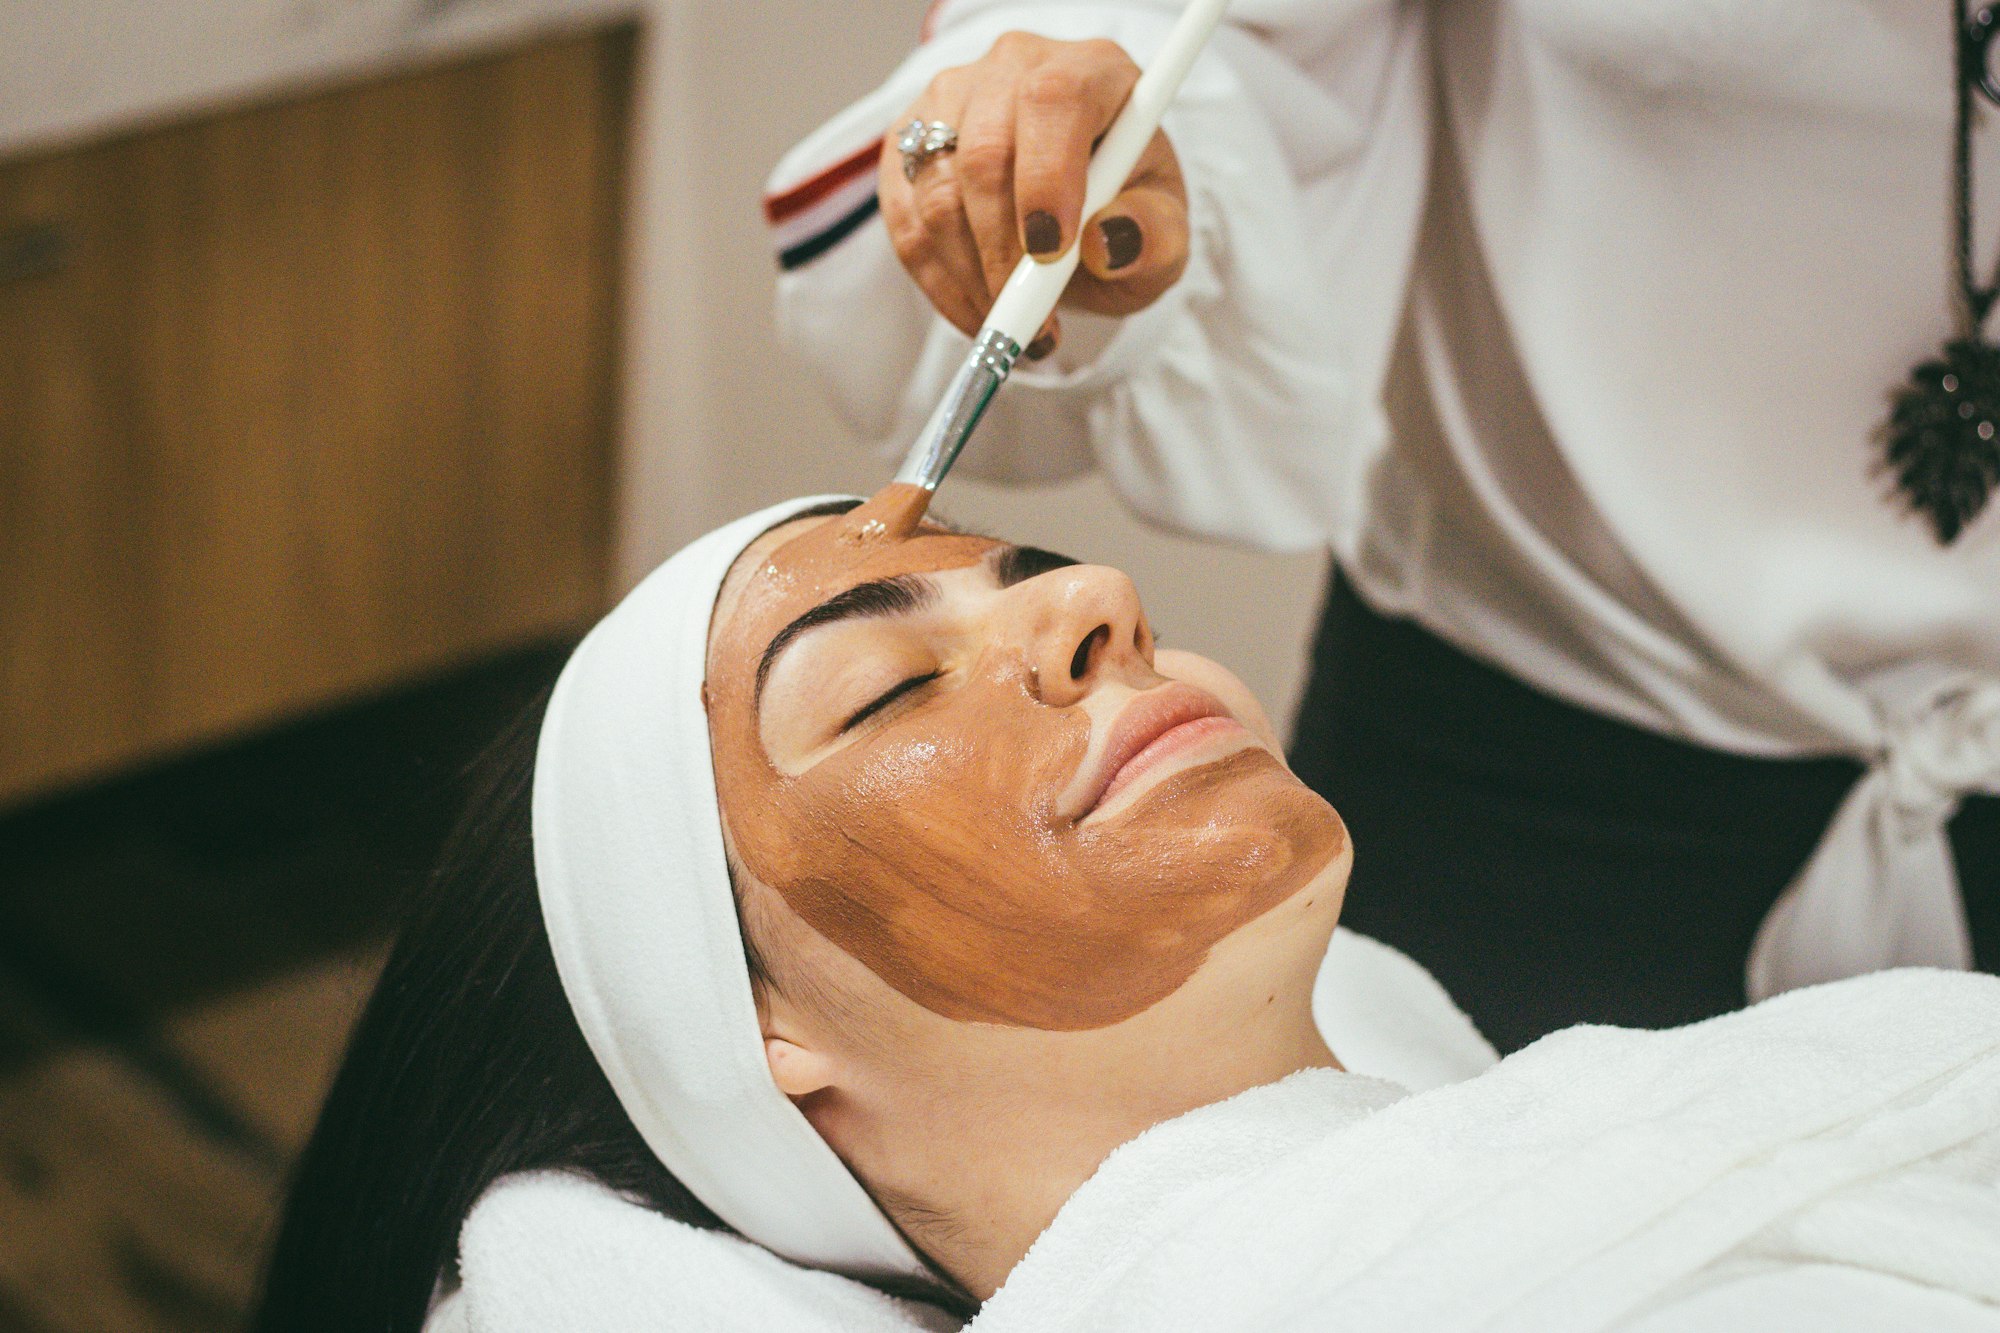 A woman receiving a facial care treatment